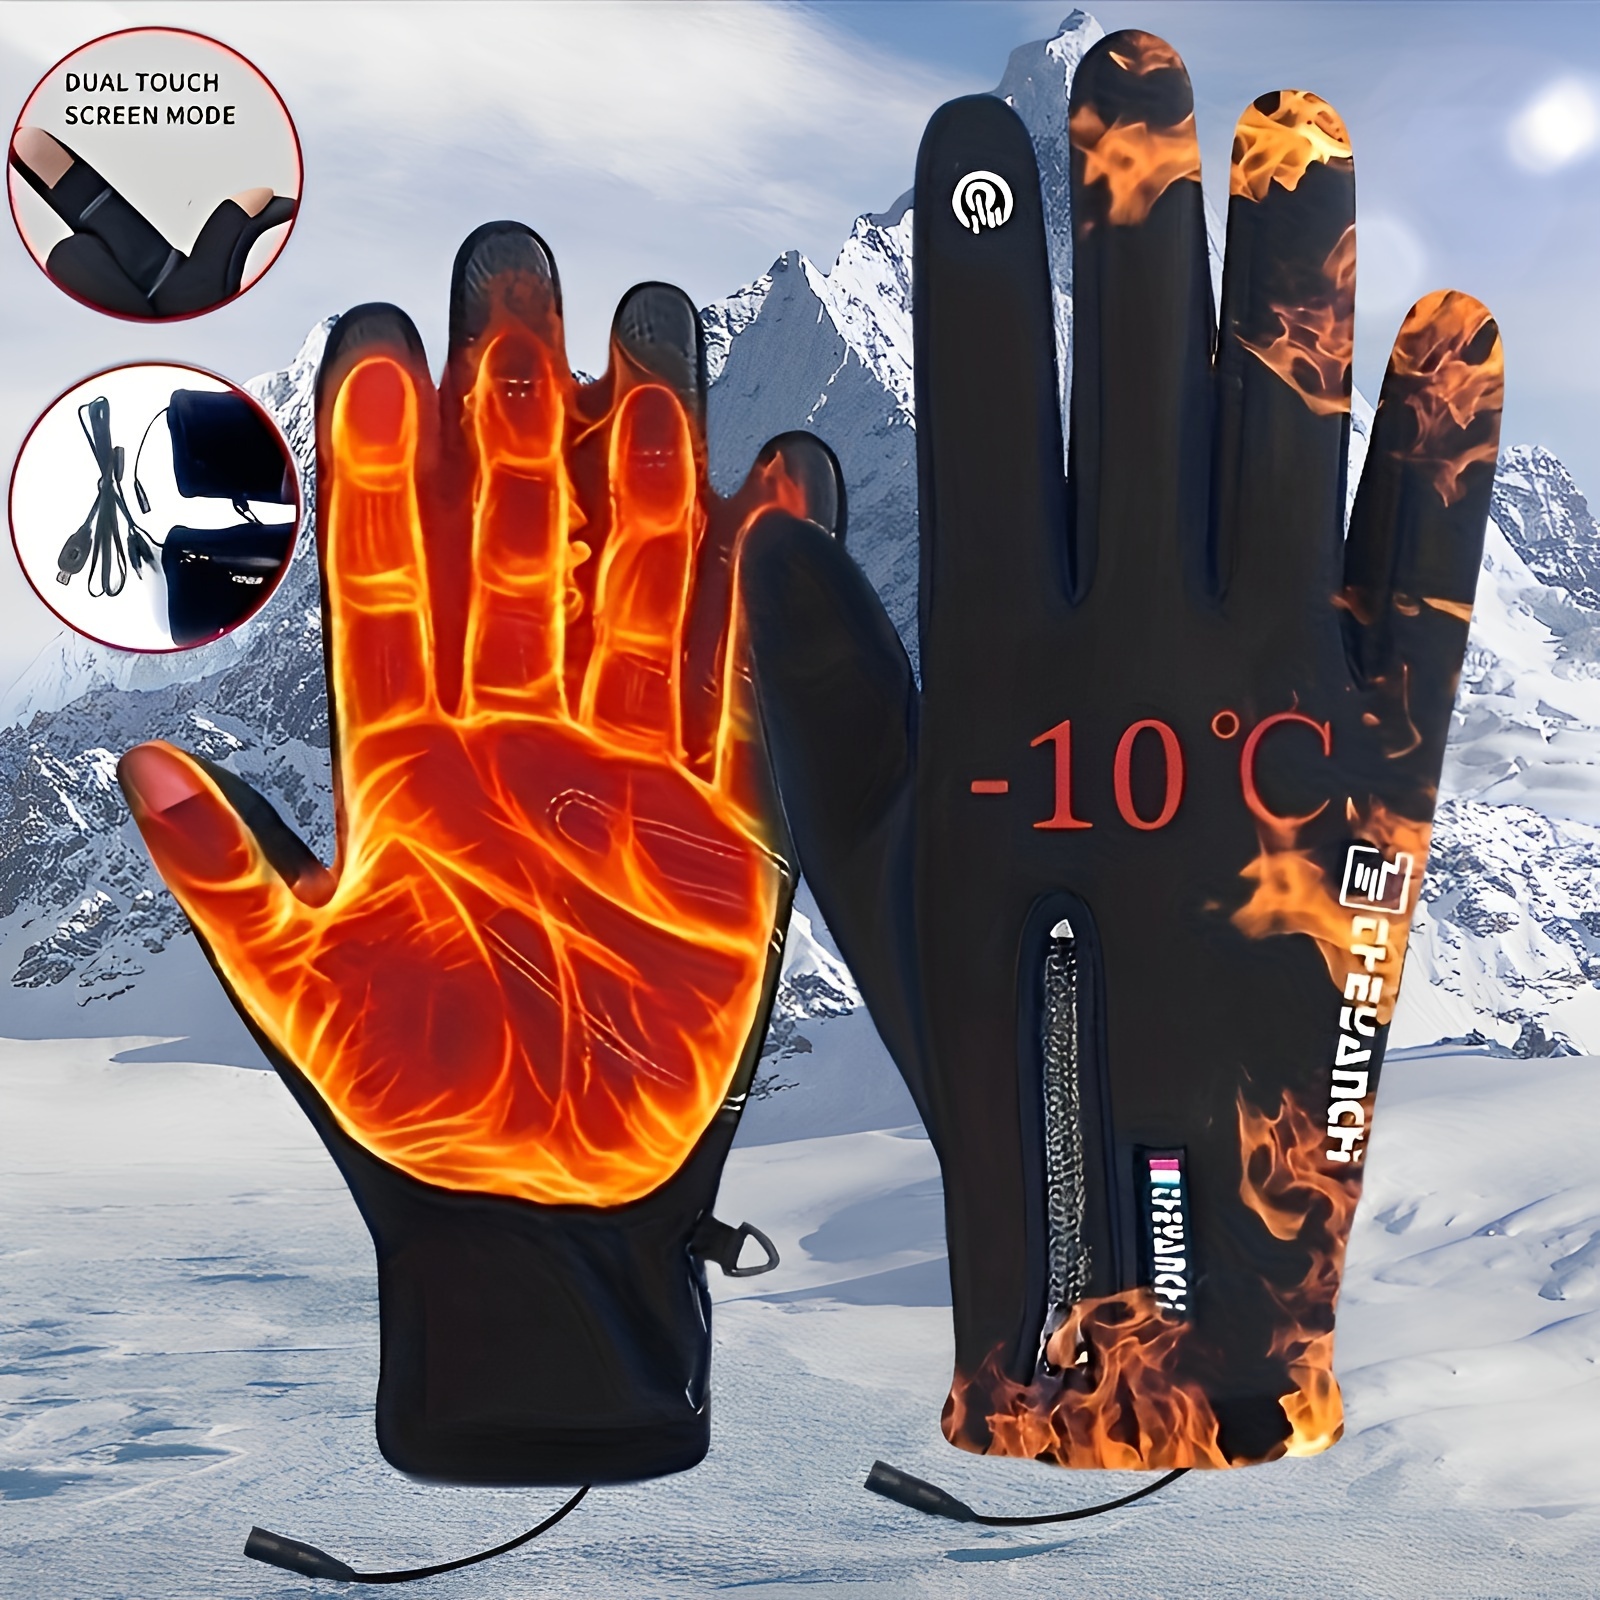 Mobile Warming Heated Ski Glove